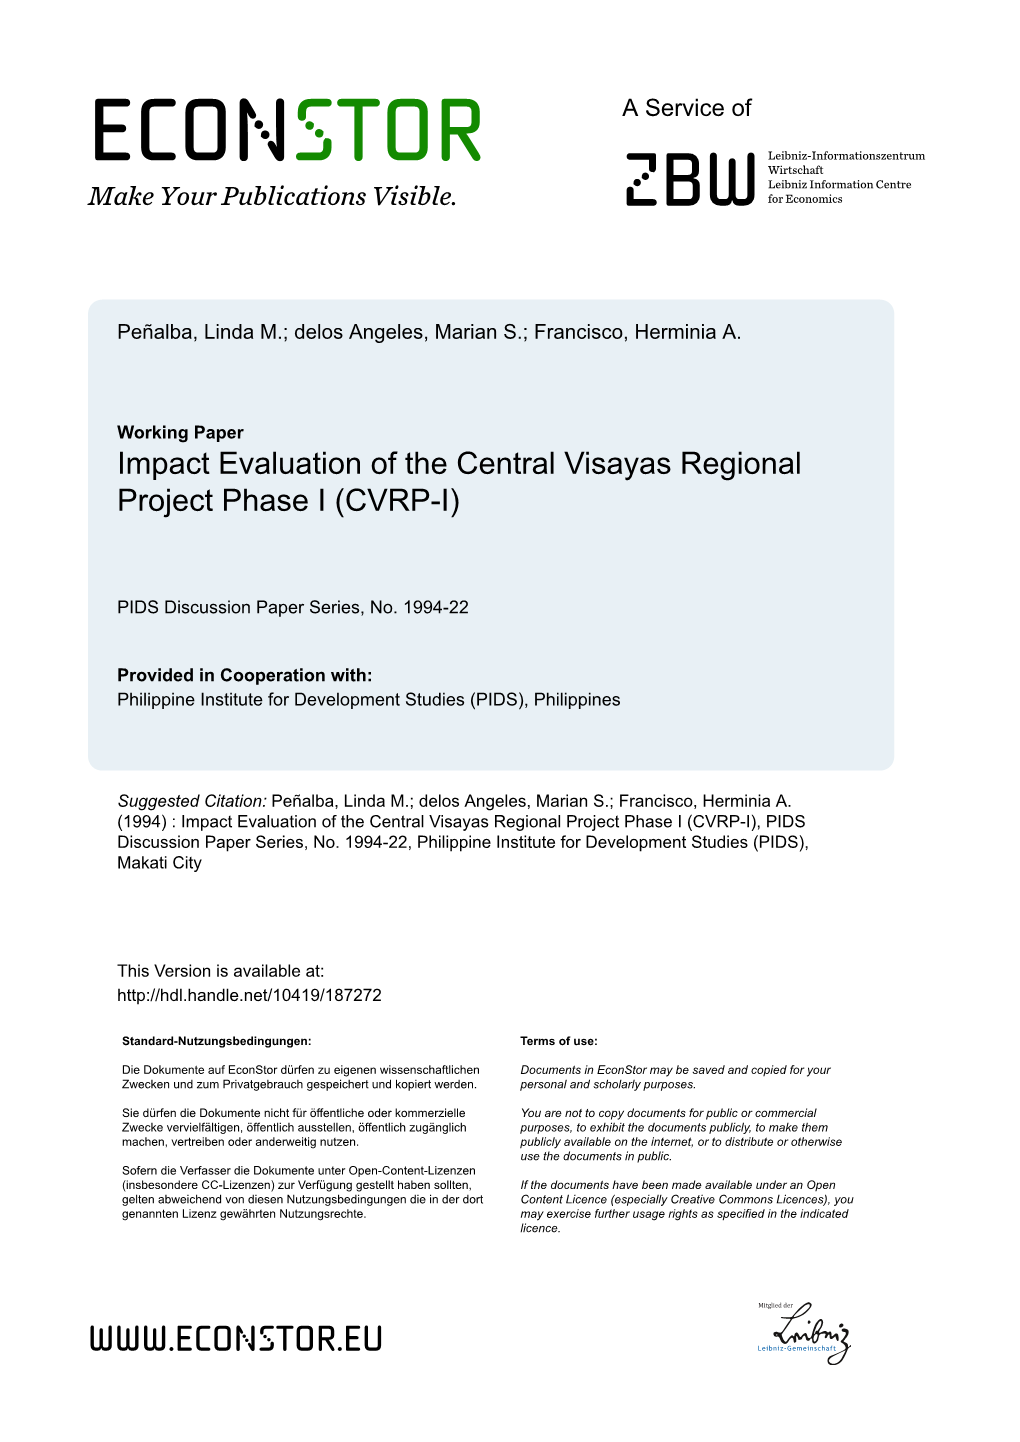 Impact Evaluation of the Central Visayas Regional Project Phase I (CVRP-I)